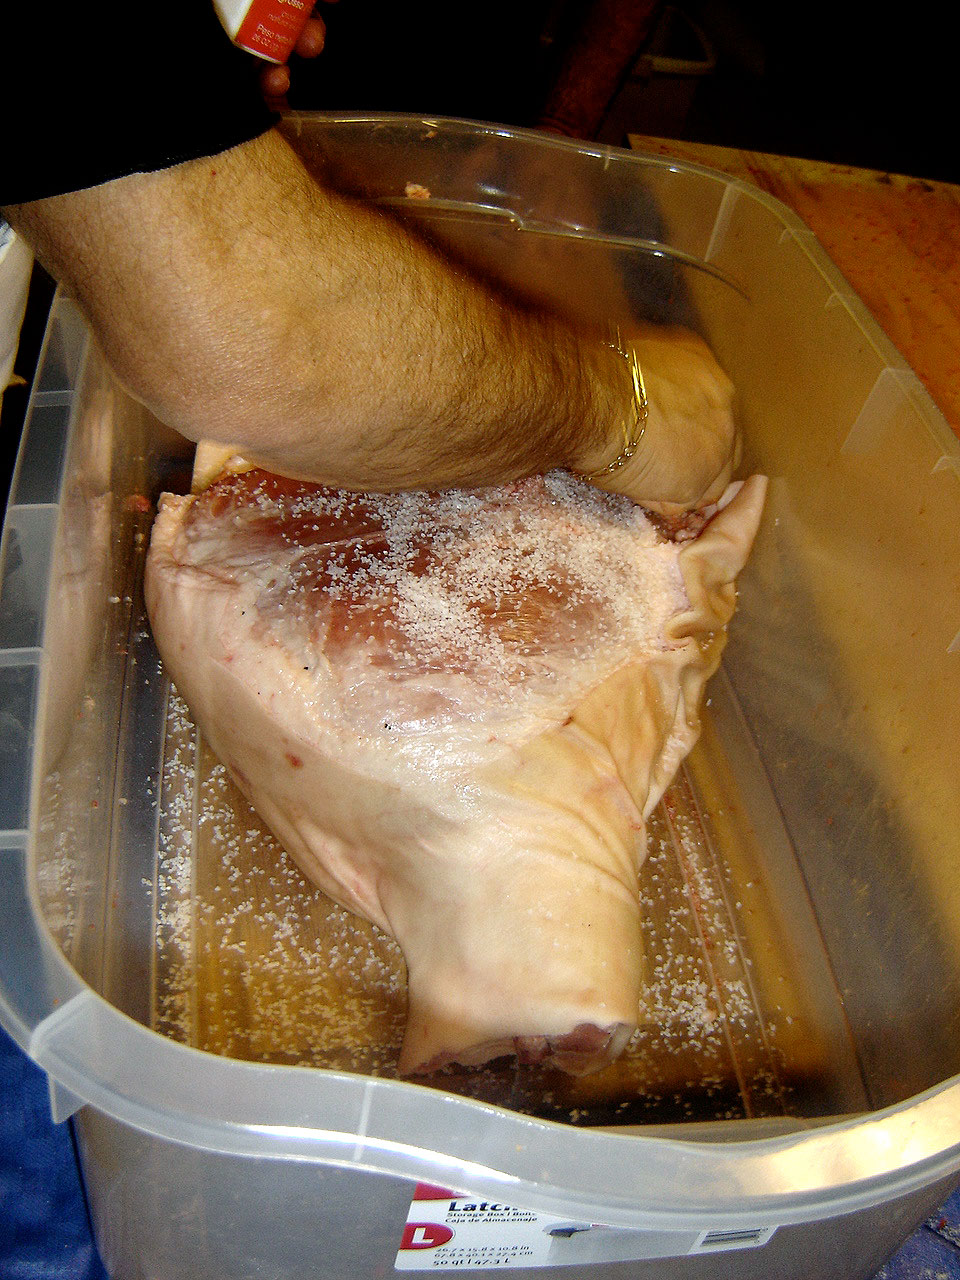 Sea salt being applied to prosciutto leg